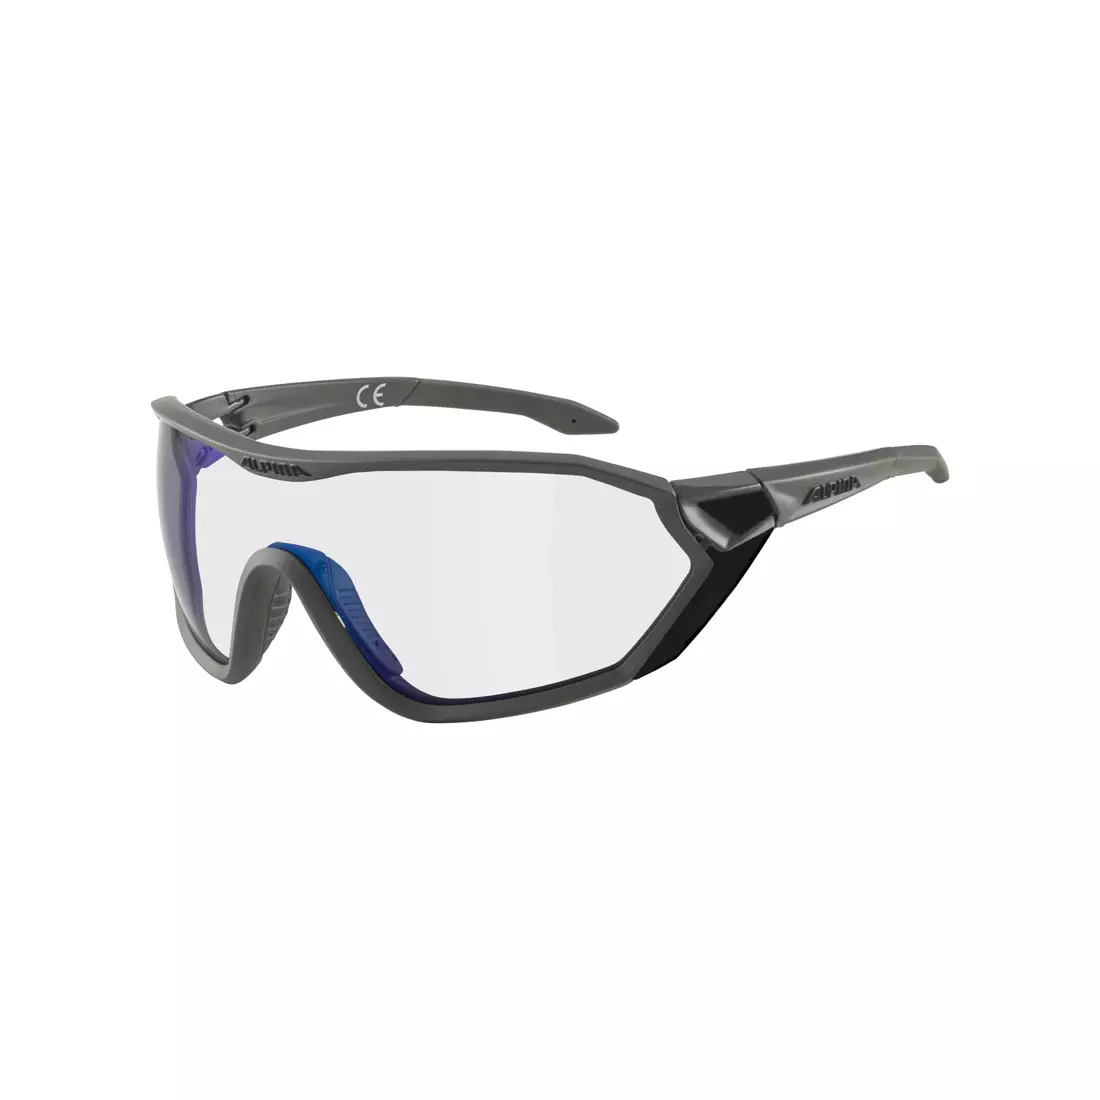 ALPINA S-WAY VM Photochromic sports glasses, moon-grey matt, blue mirrorr